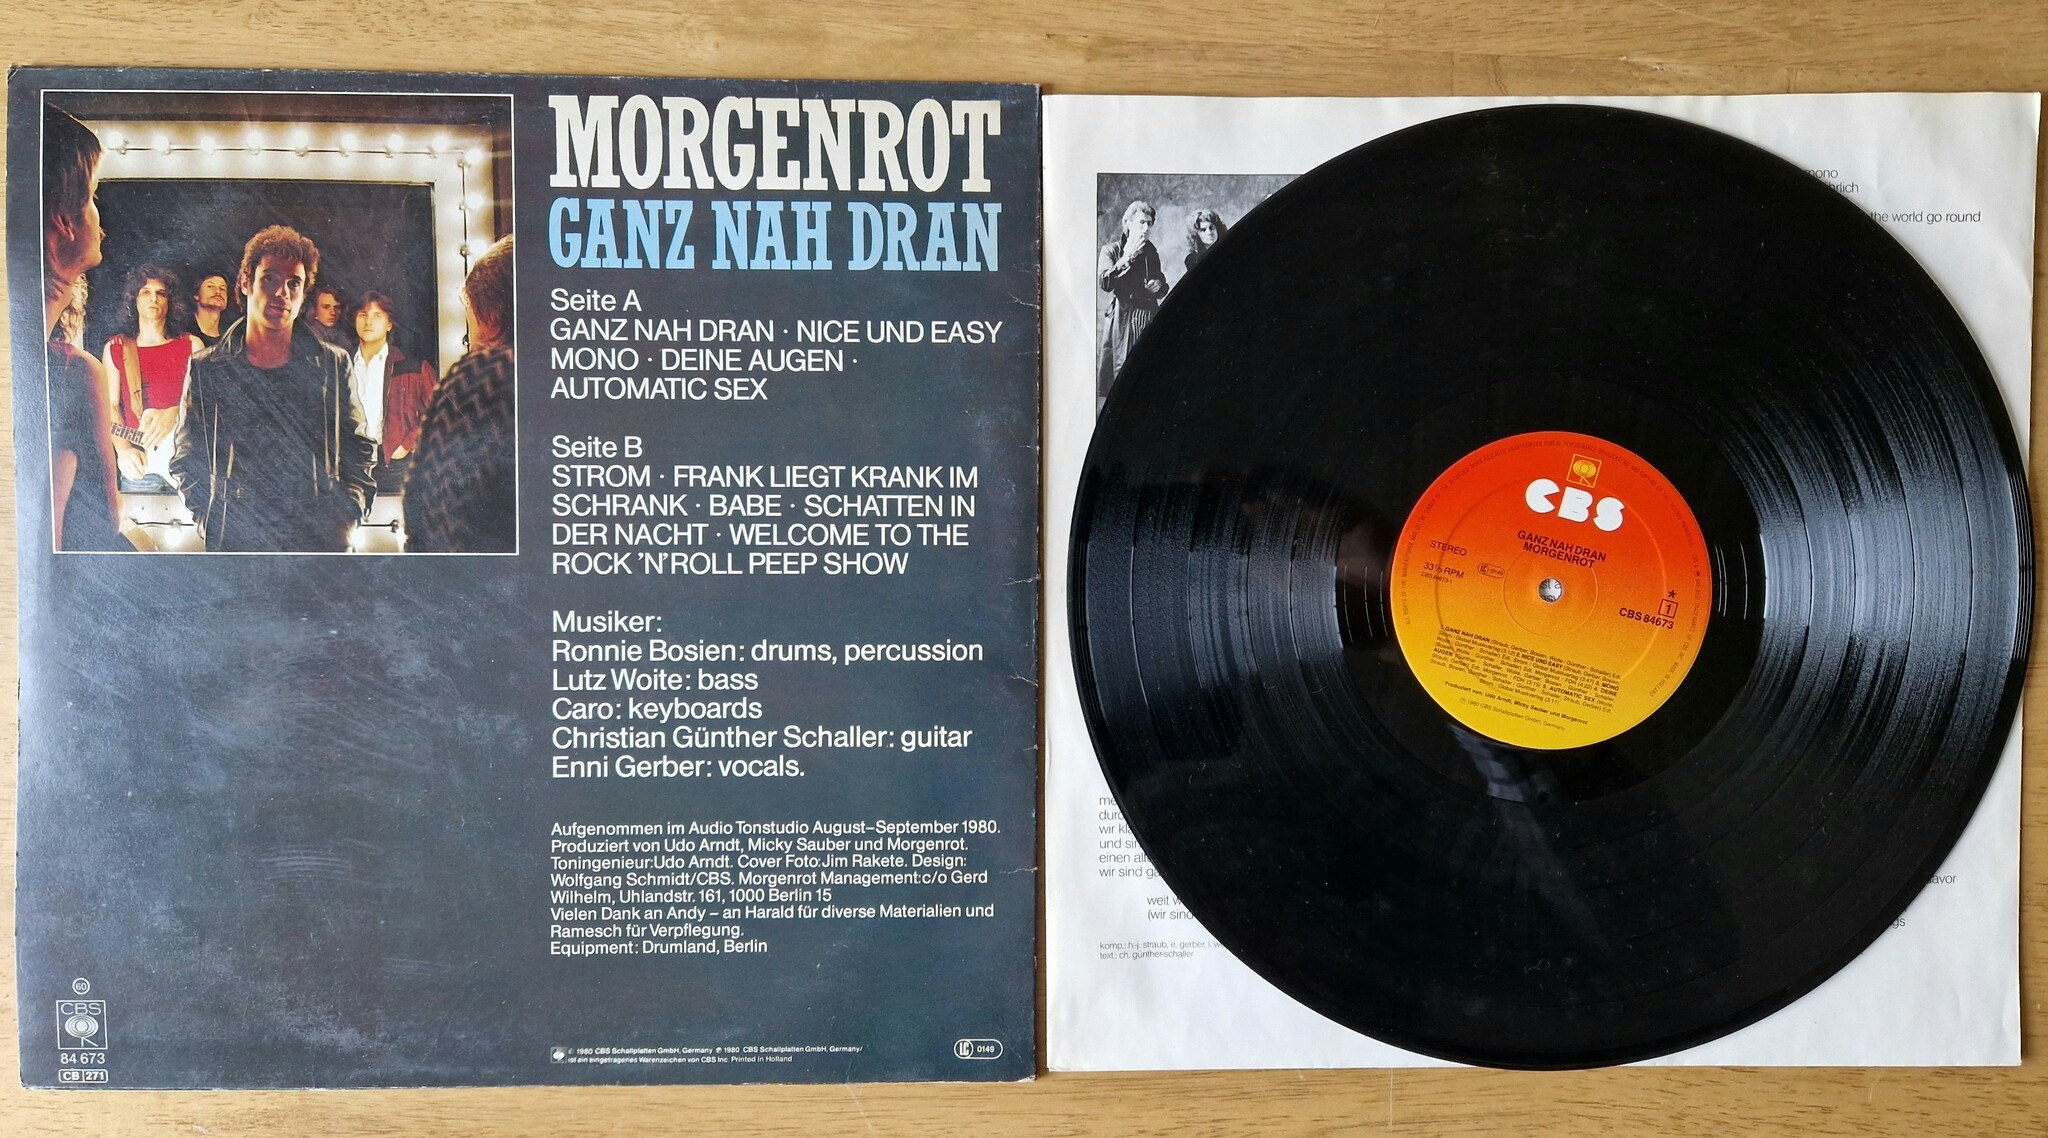 Morgenrot, Ganz nah dran. Vinyl LP